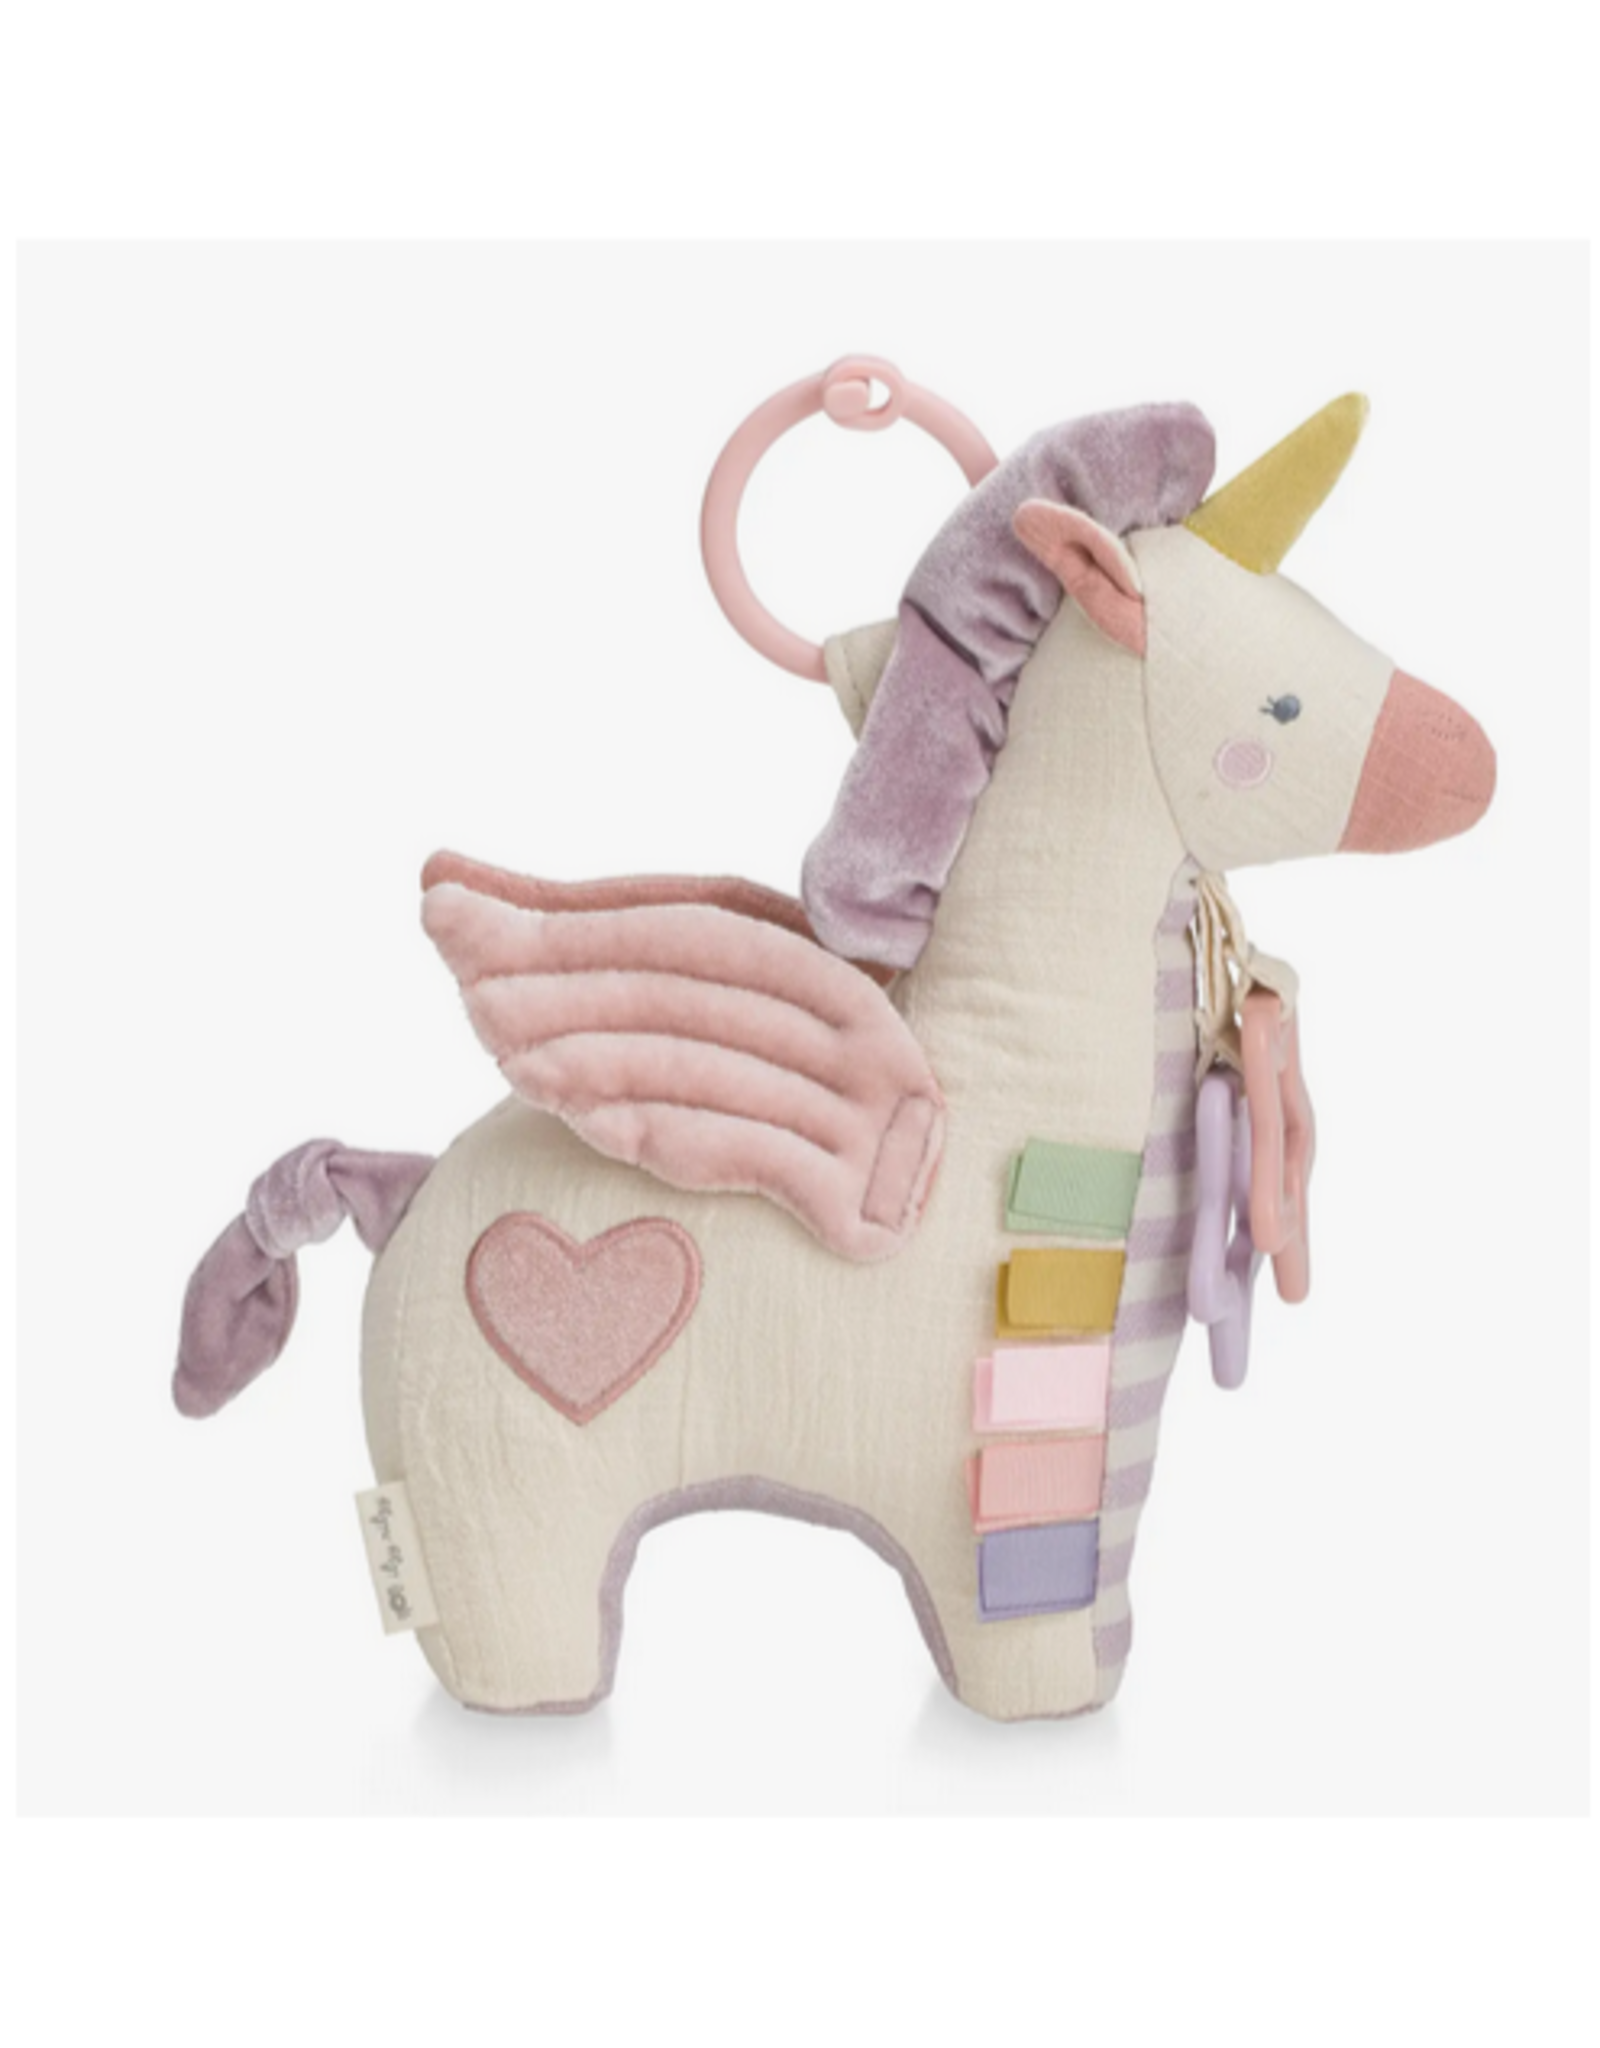 Itzy Ritzy Itzy  Link & Love Activity Plush & Teether Toy-Pegasus